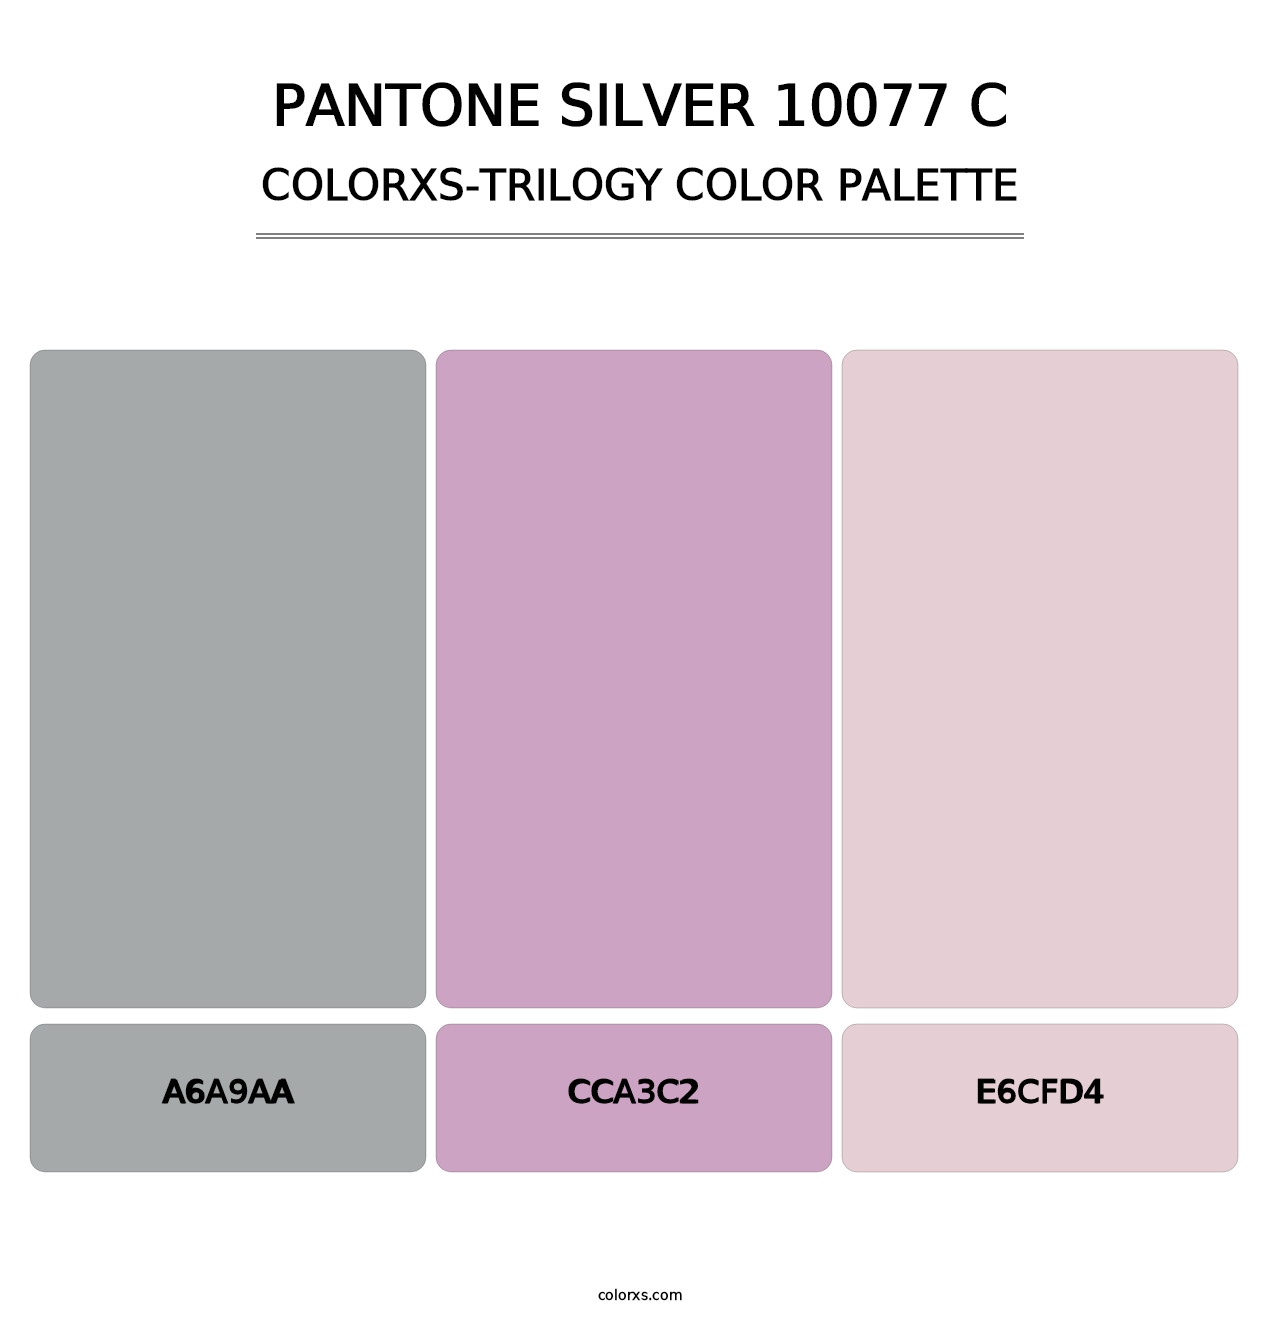 PANTONE Silver 10077 C - Colorxs Trilogy Palette